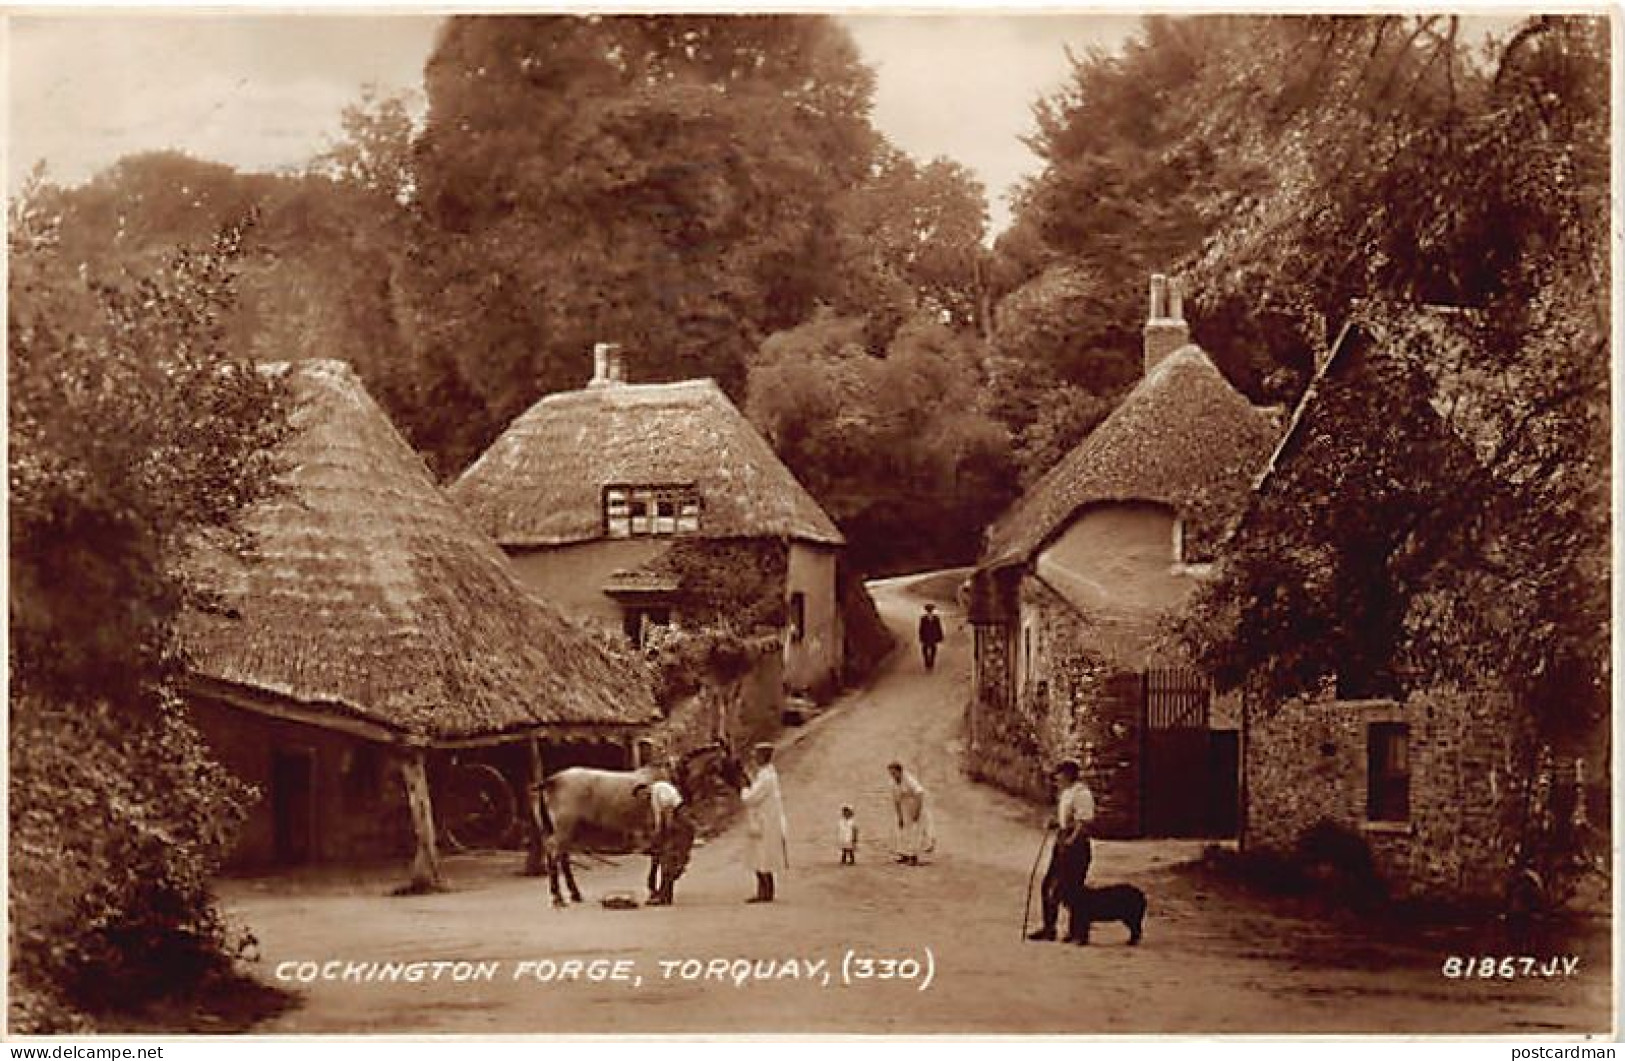 England - TORQUAY - Cockington Forge - Torquay